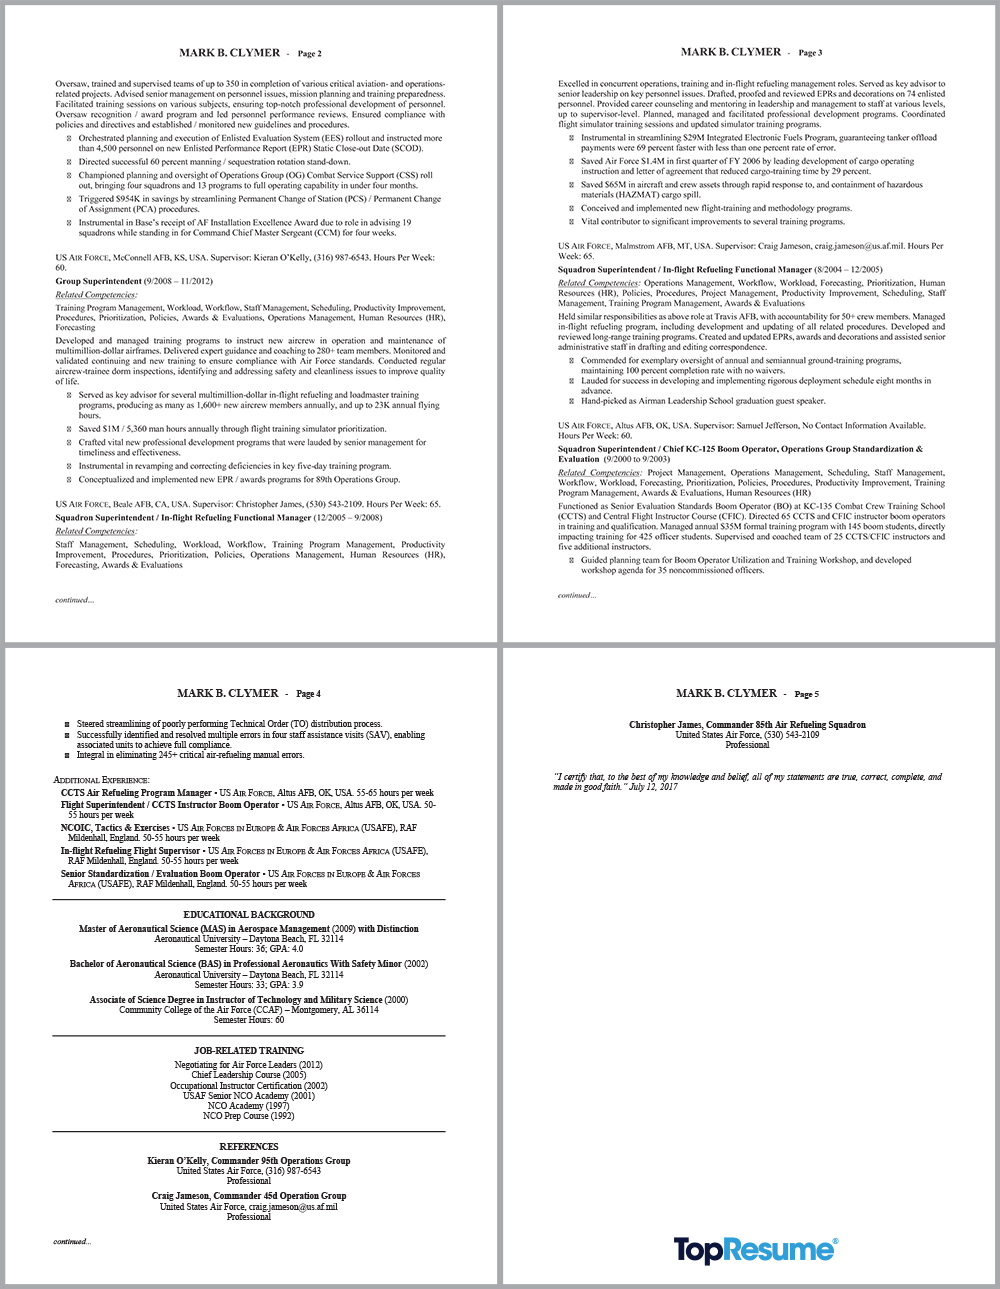 Federal Resume Template 6069404 Federalresume federal resume template|wikiresume.com